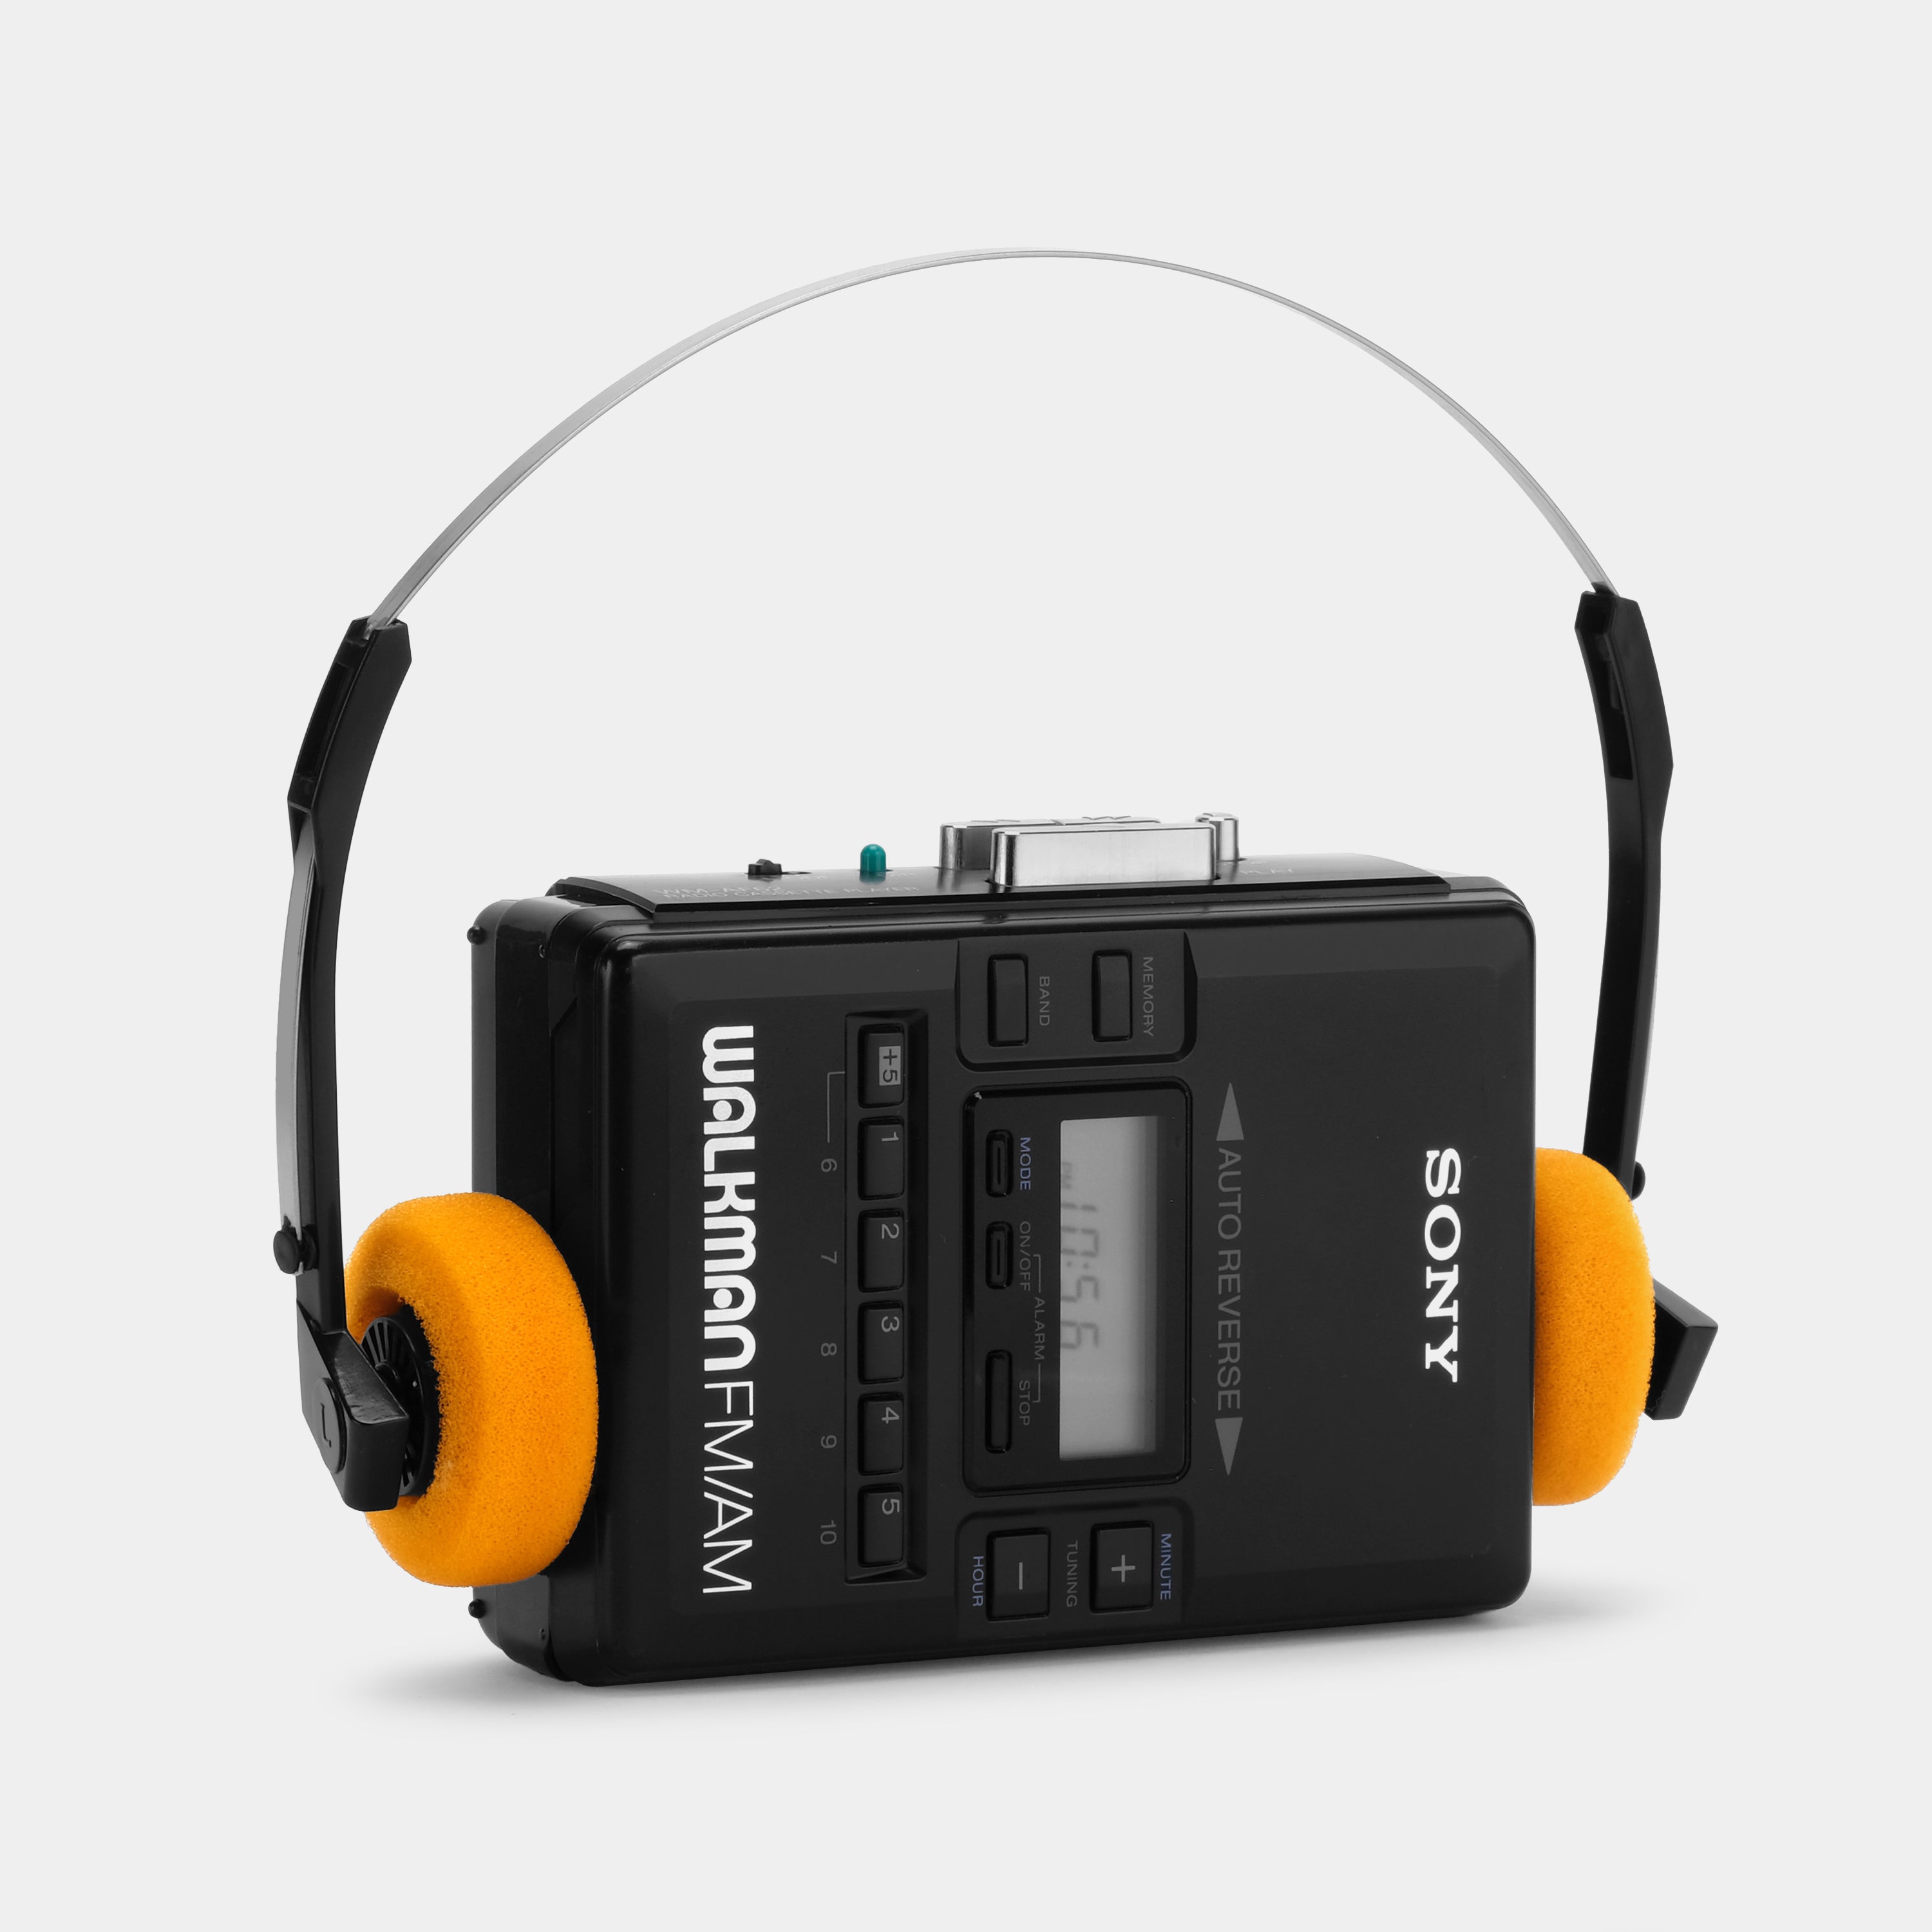 Sony Walkman WM-AF62 AM/FM Portable Cassette Player